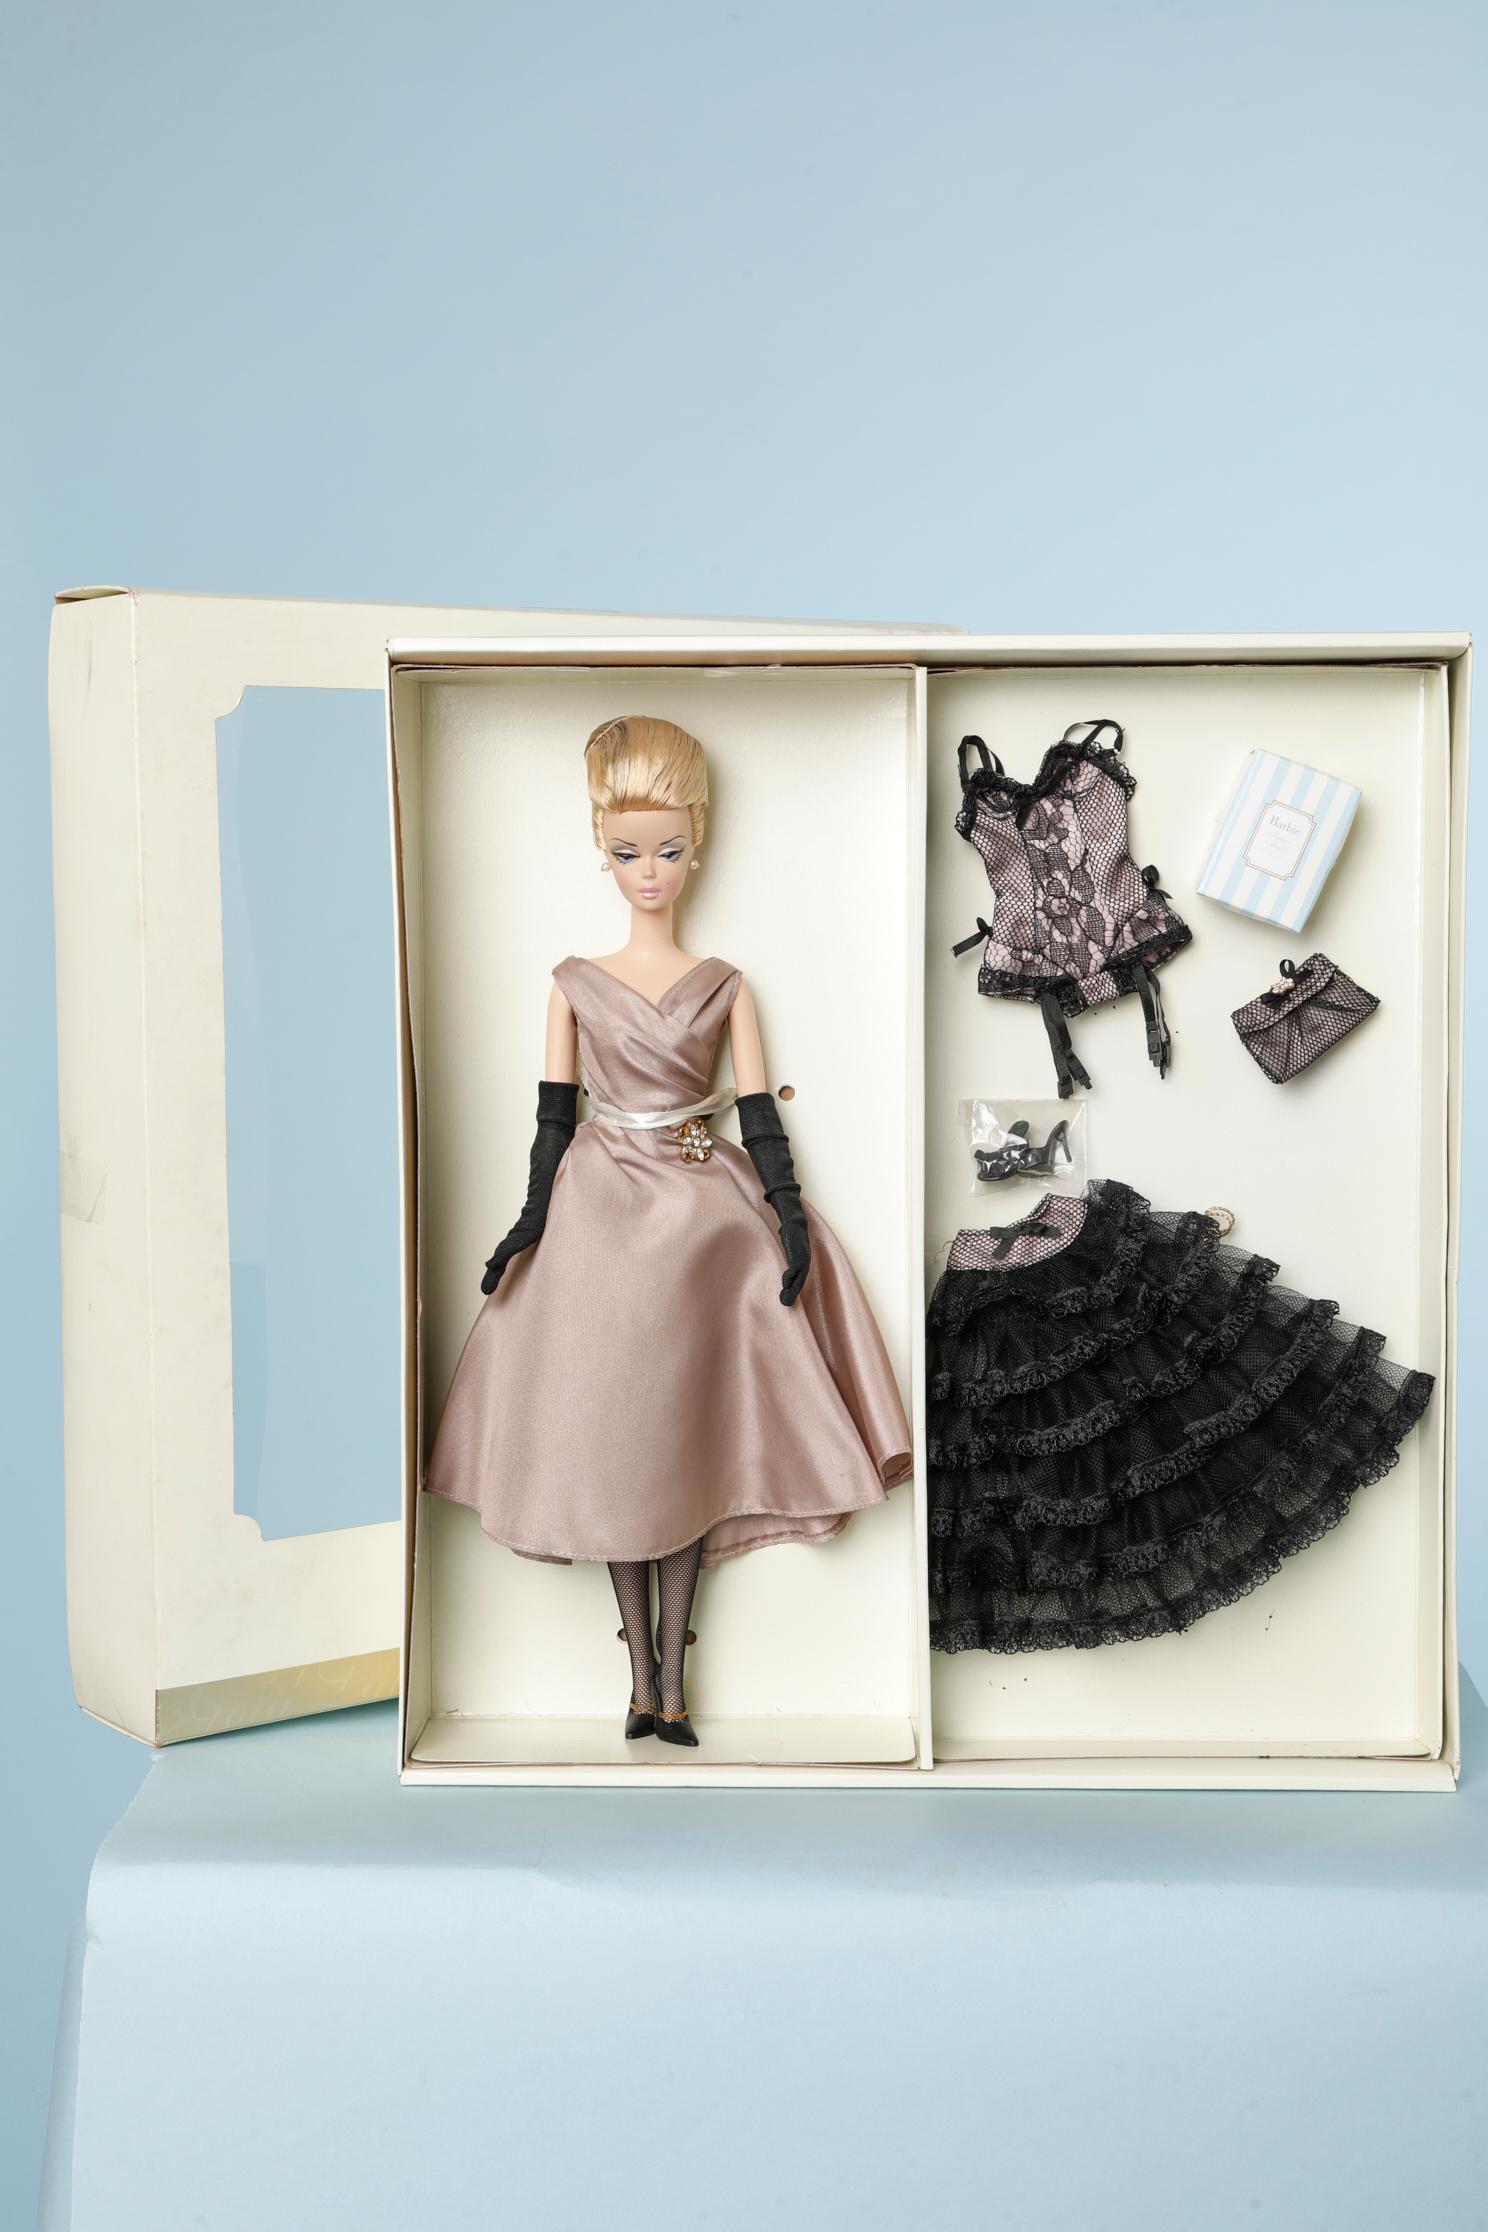 Barbie Fashion Model / High Tea and Savories / Gold Label.
Echtheitszertifikat . Sammlerkarte. 
Größe: 31,75 cm ( = 12,5 Zoll)